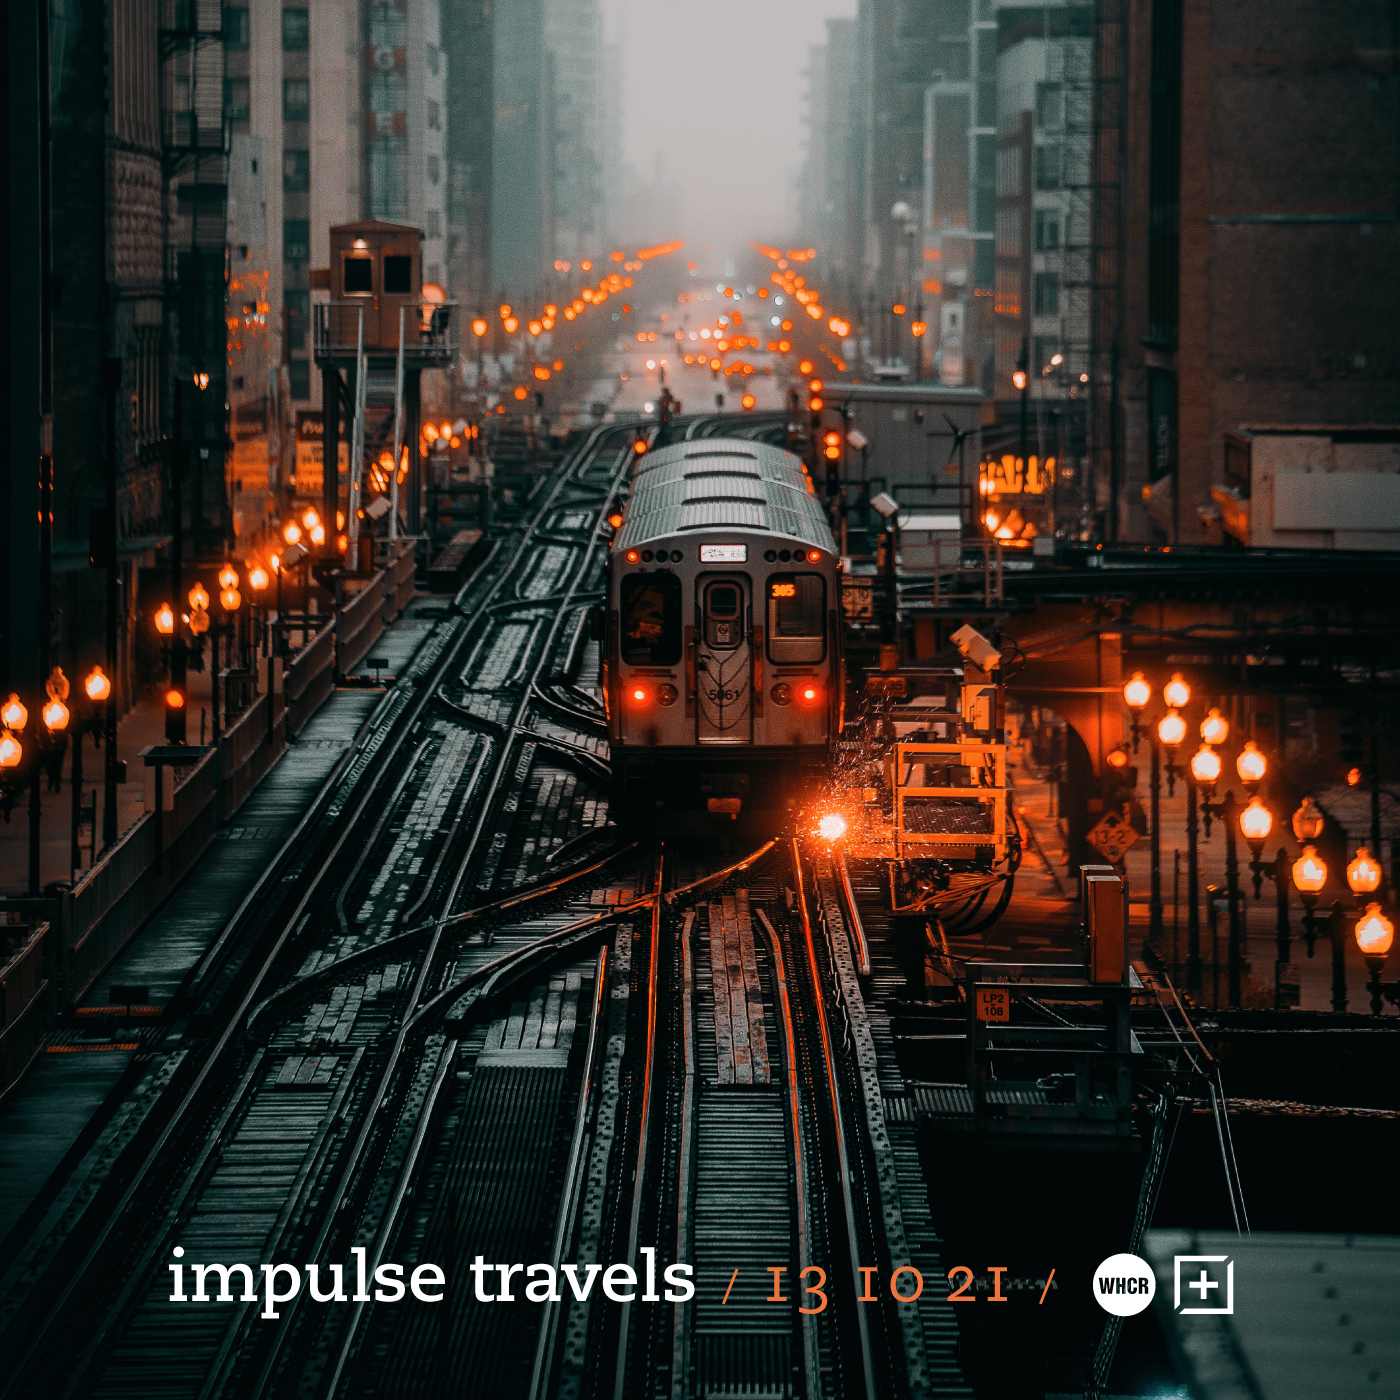 impulse travels radio show w/ dj lil tiger + empanadamn